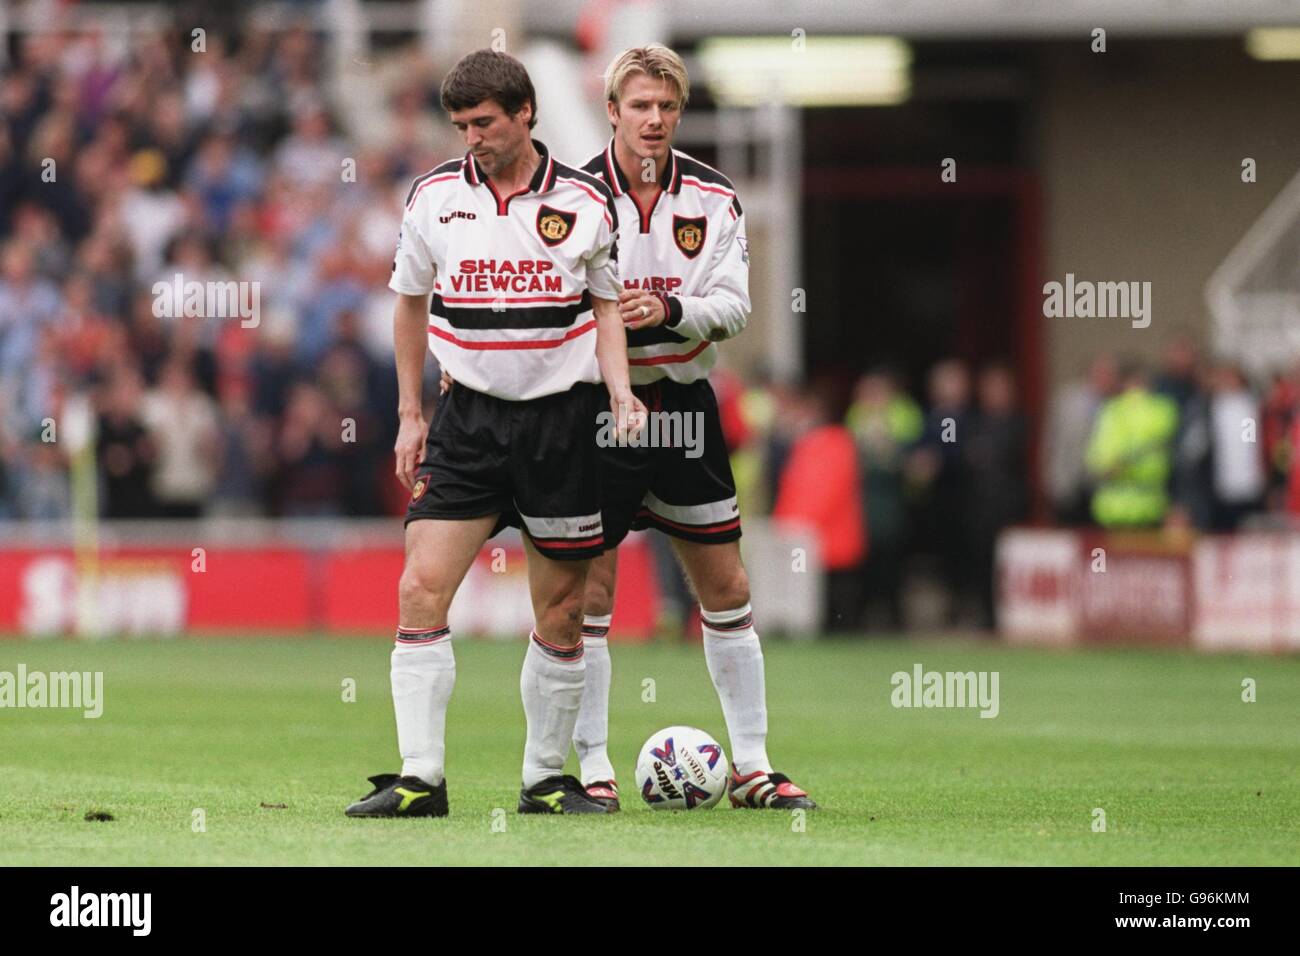 Soccer - FA Carling Premiership - Middlesbrough v Manchester United. Manchester United's David Beckham comforts Roy Keane after getting injured Stock Photo